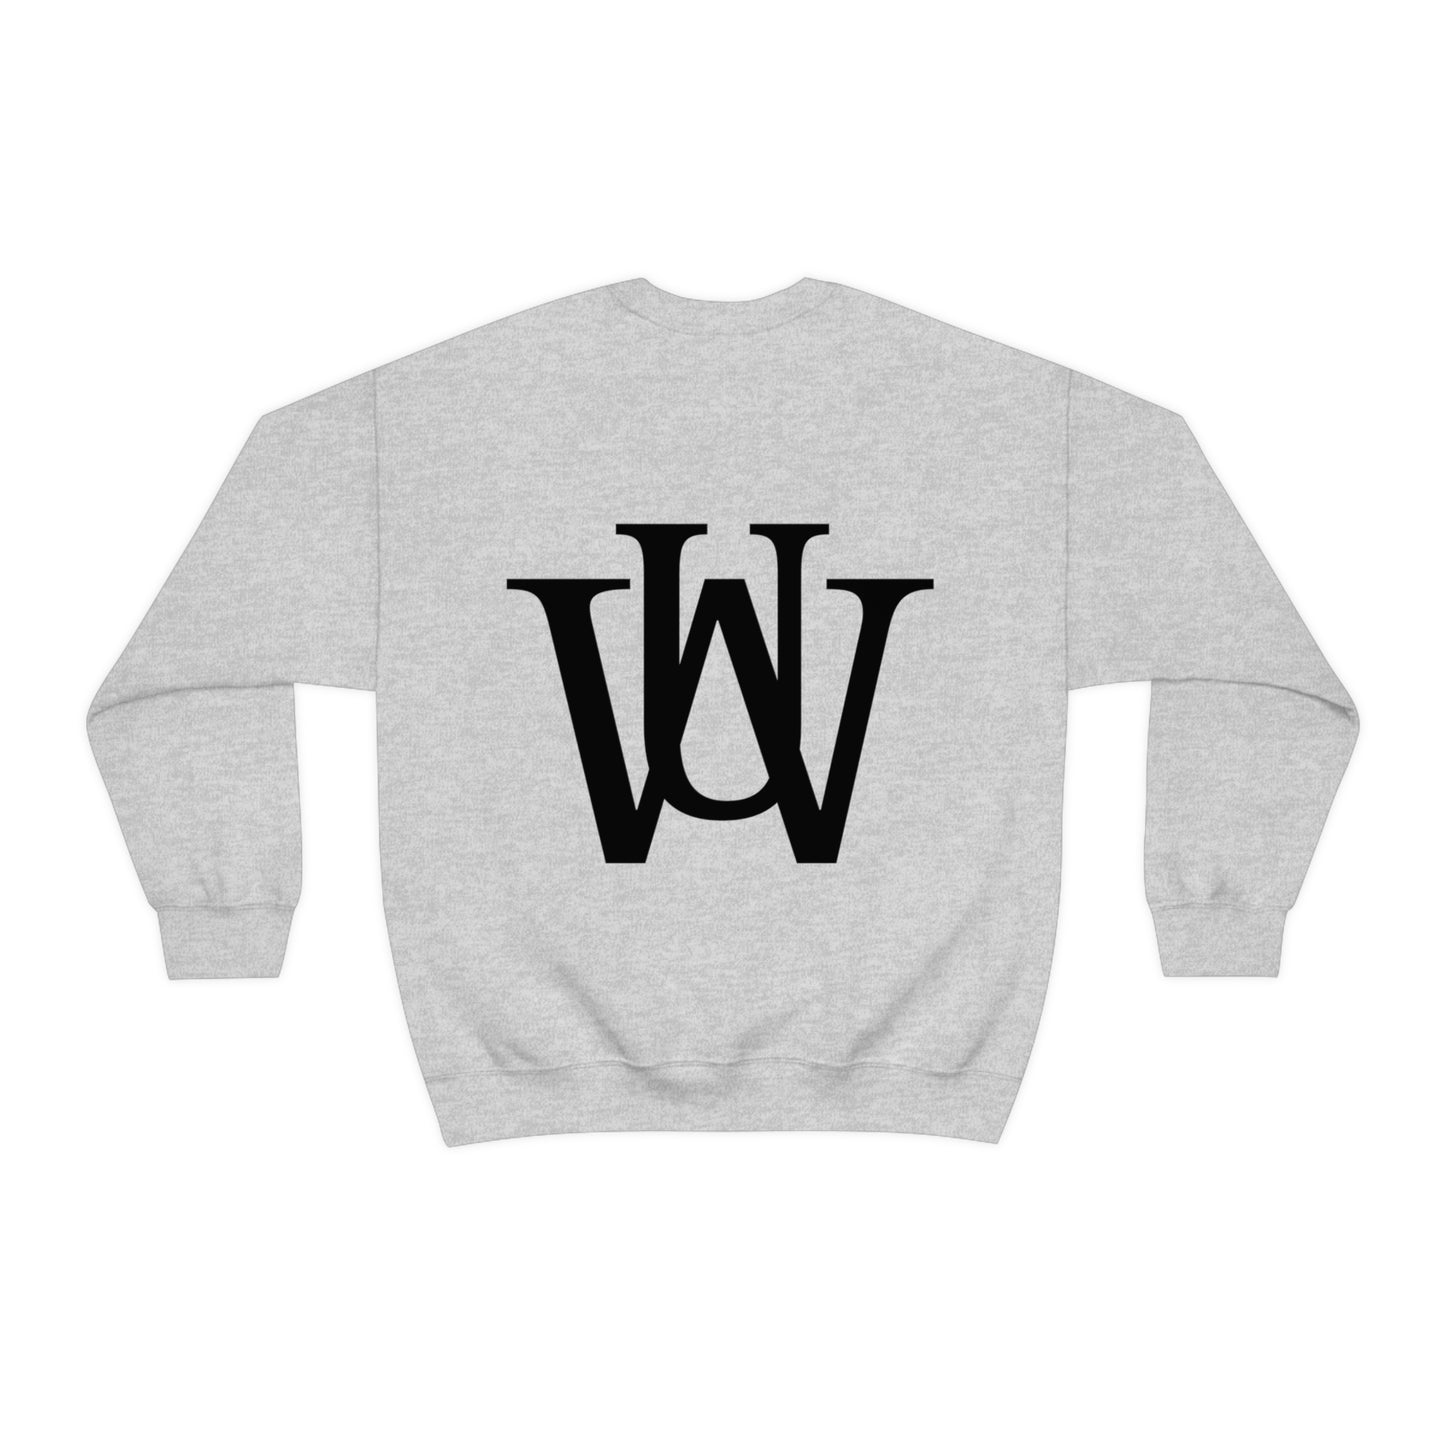 WAKE UP Crewneck Sweatshirt